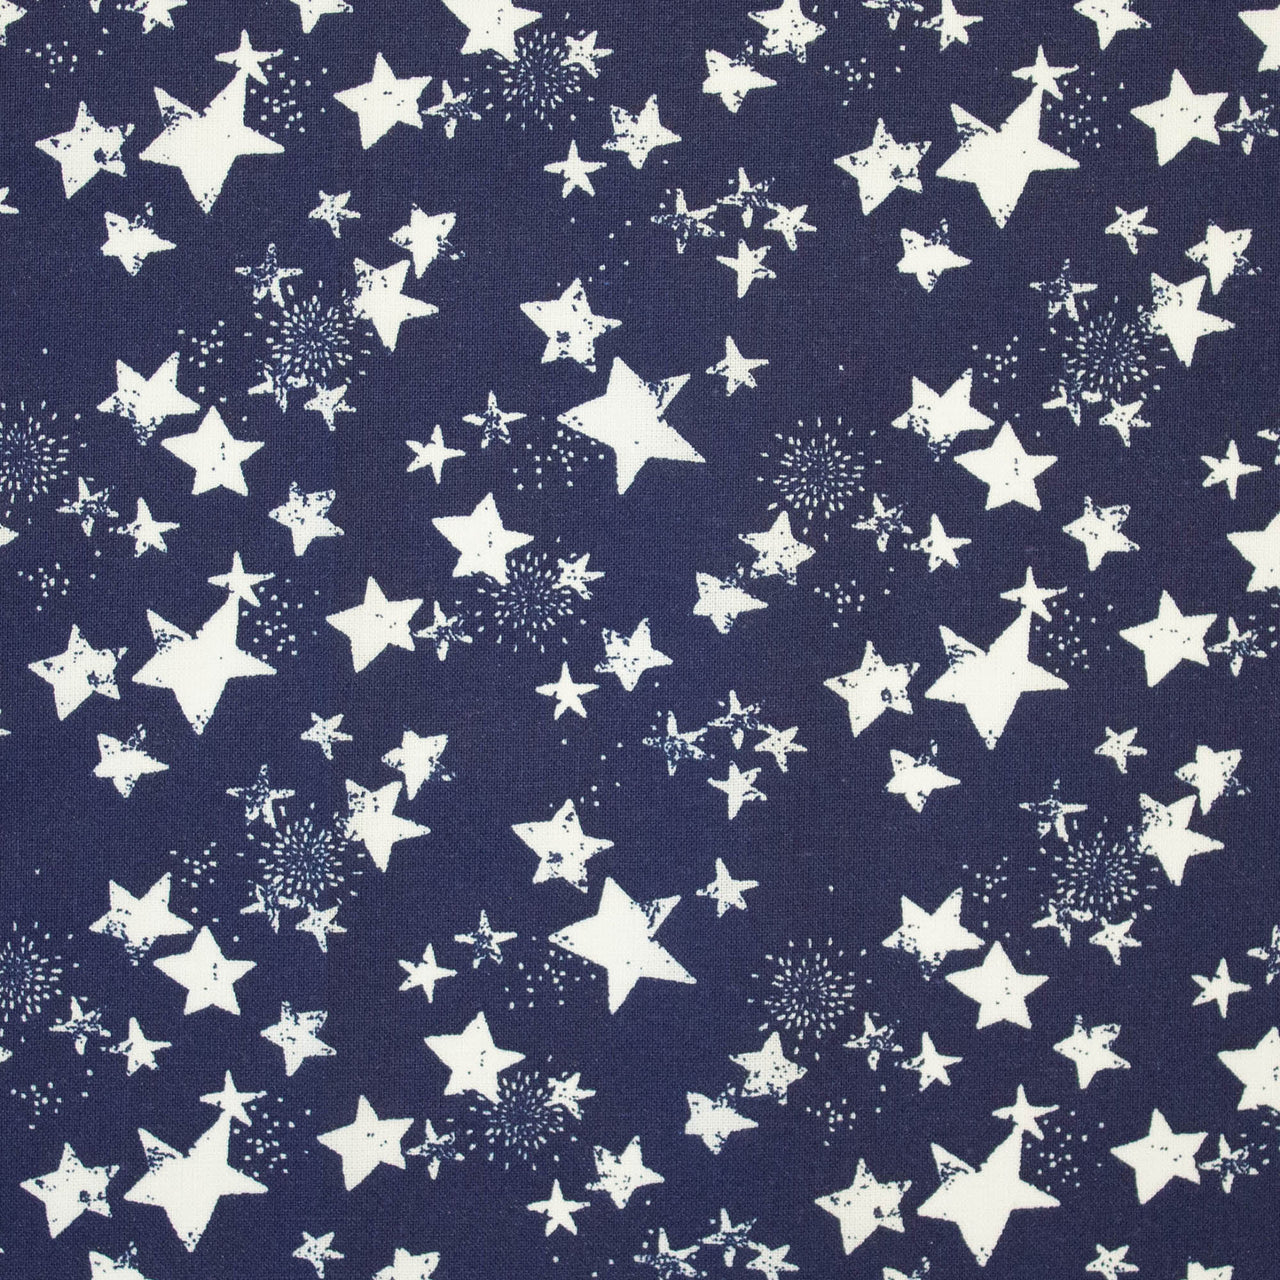 Stars at Night - White Stars on Navy Cotton Fabric Printed Cotton Fabric